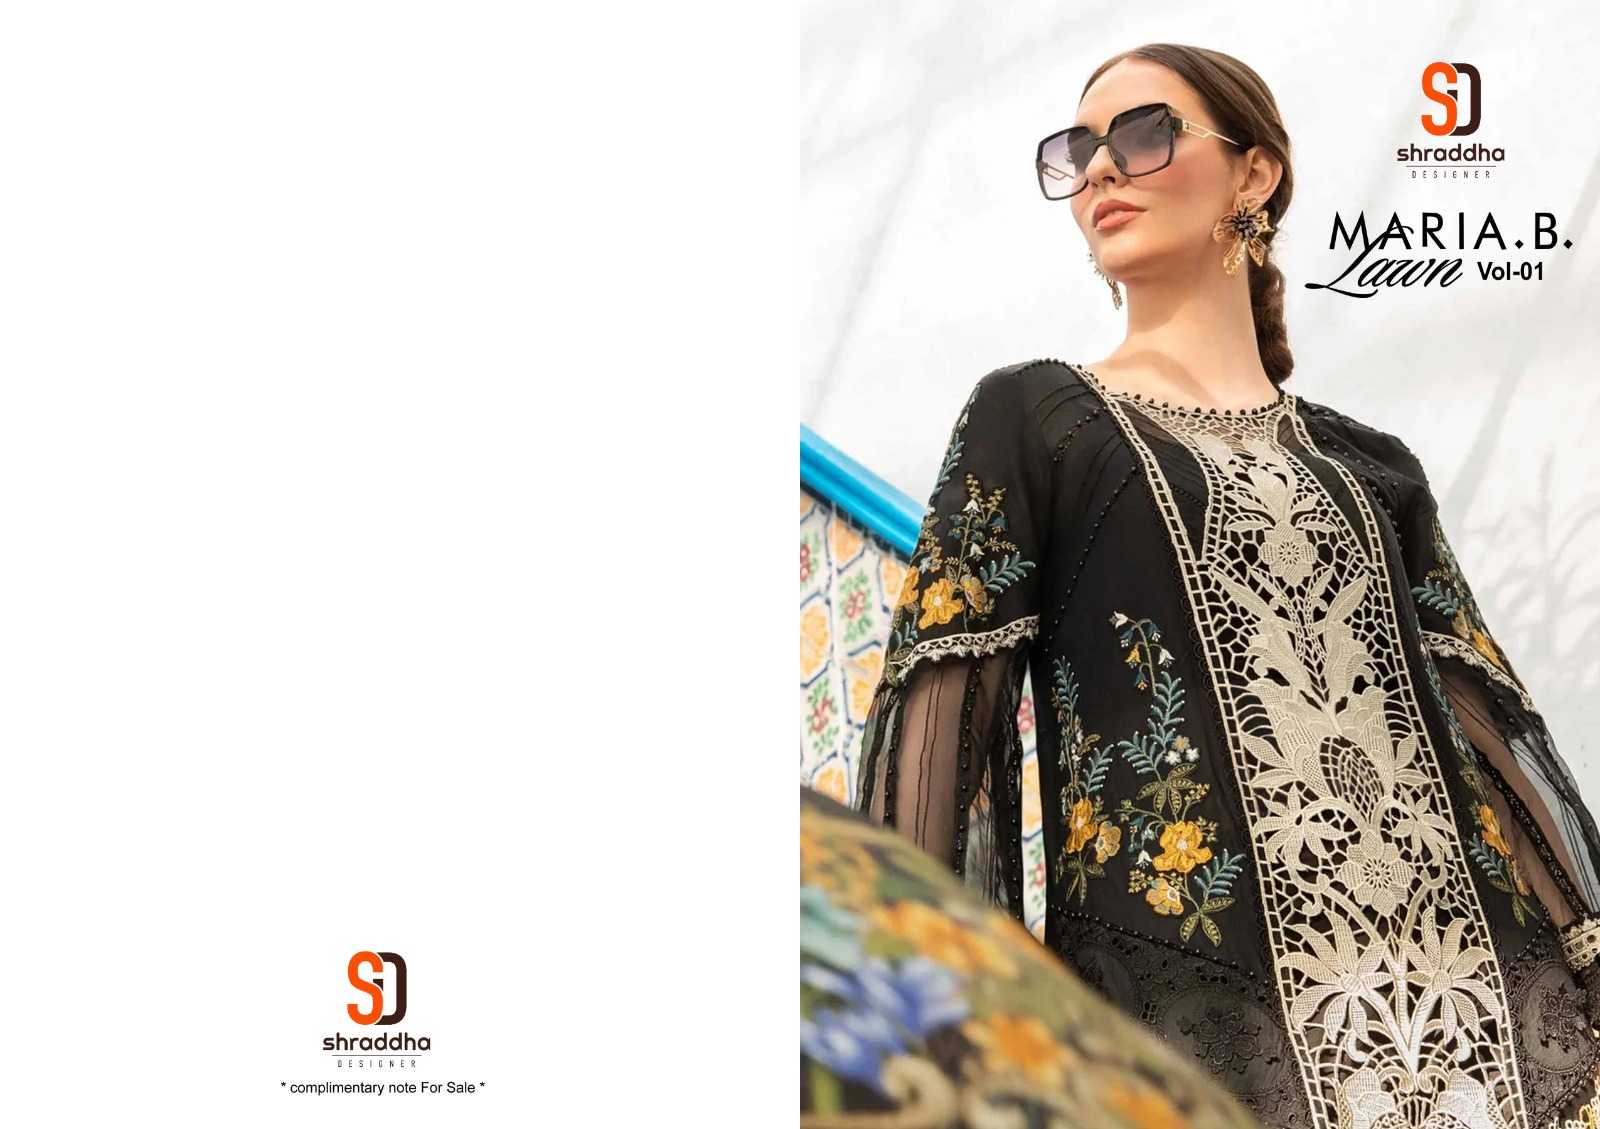 Shraddha designer maria.b lawn vol 1 new launching salwar suit